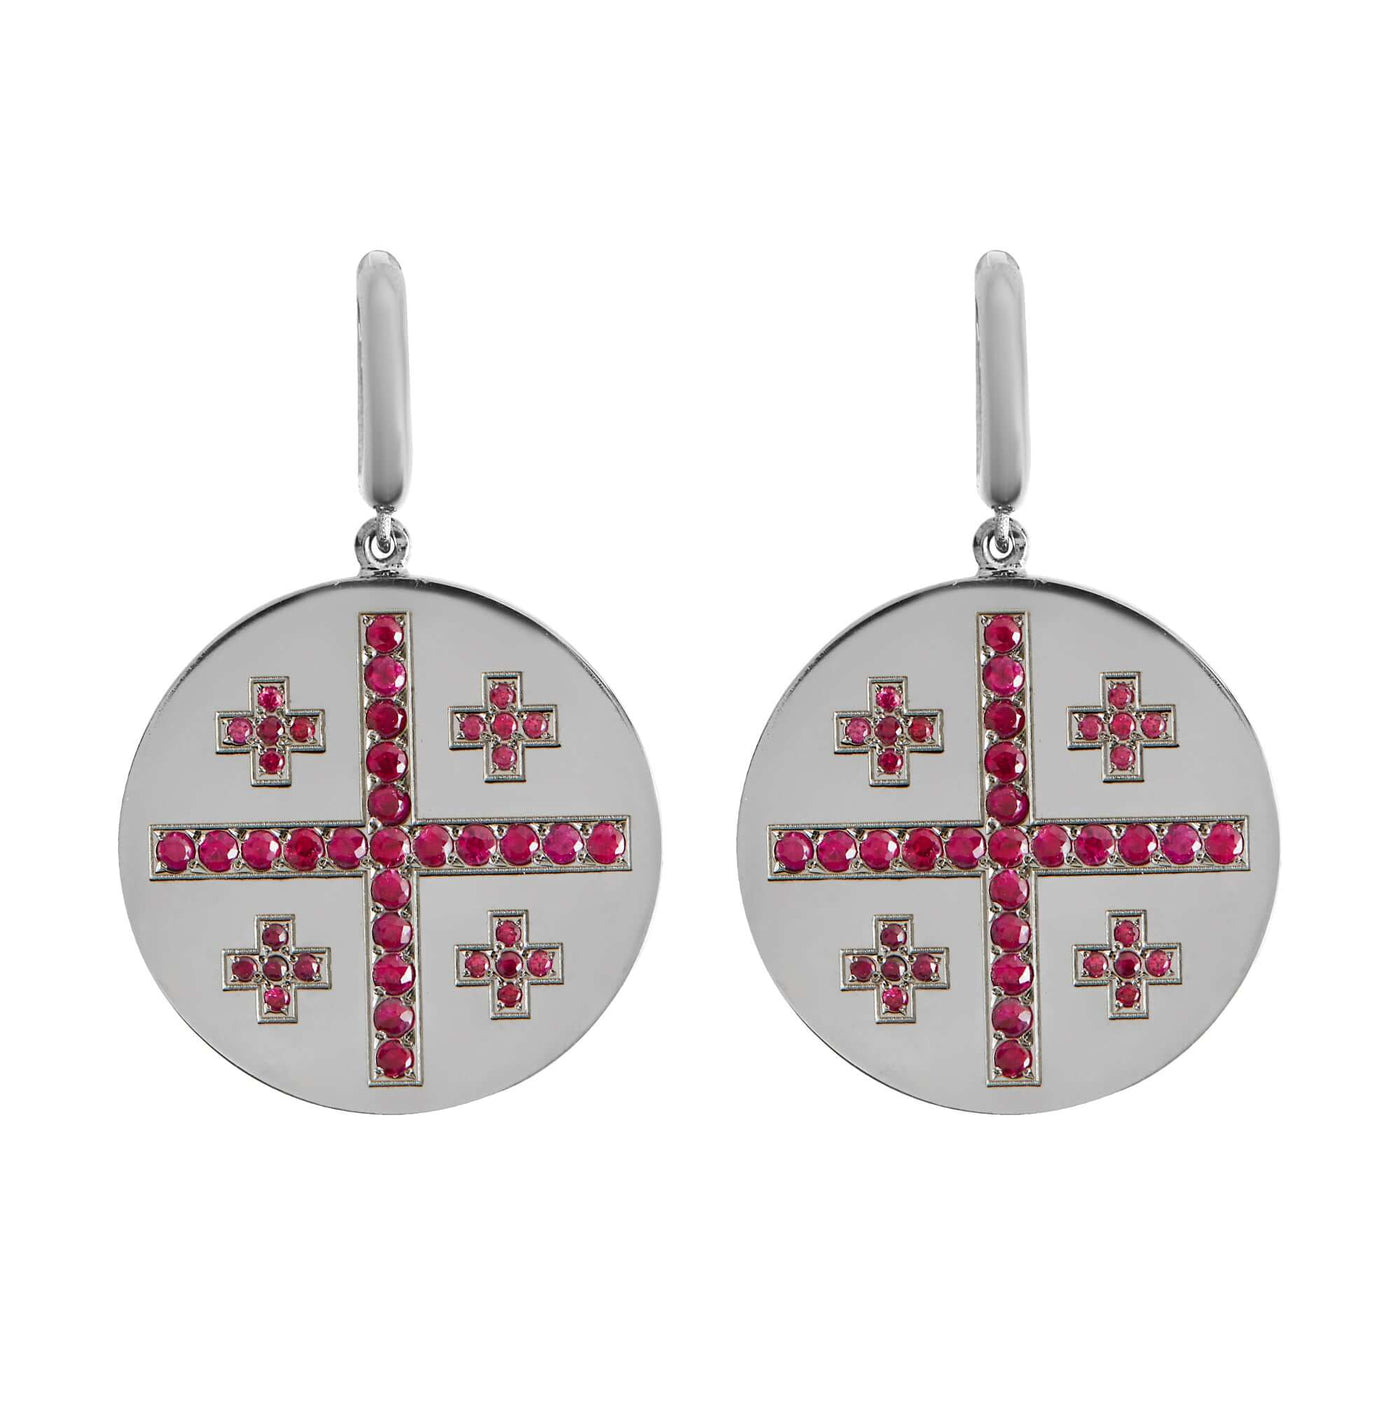 Jerusalem Cross Earrings - 1821 Liberty - Ileana Makri store